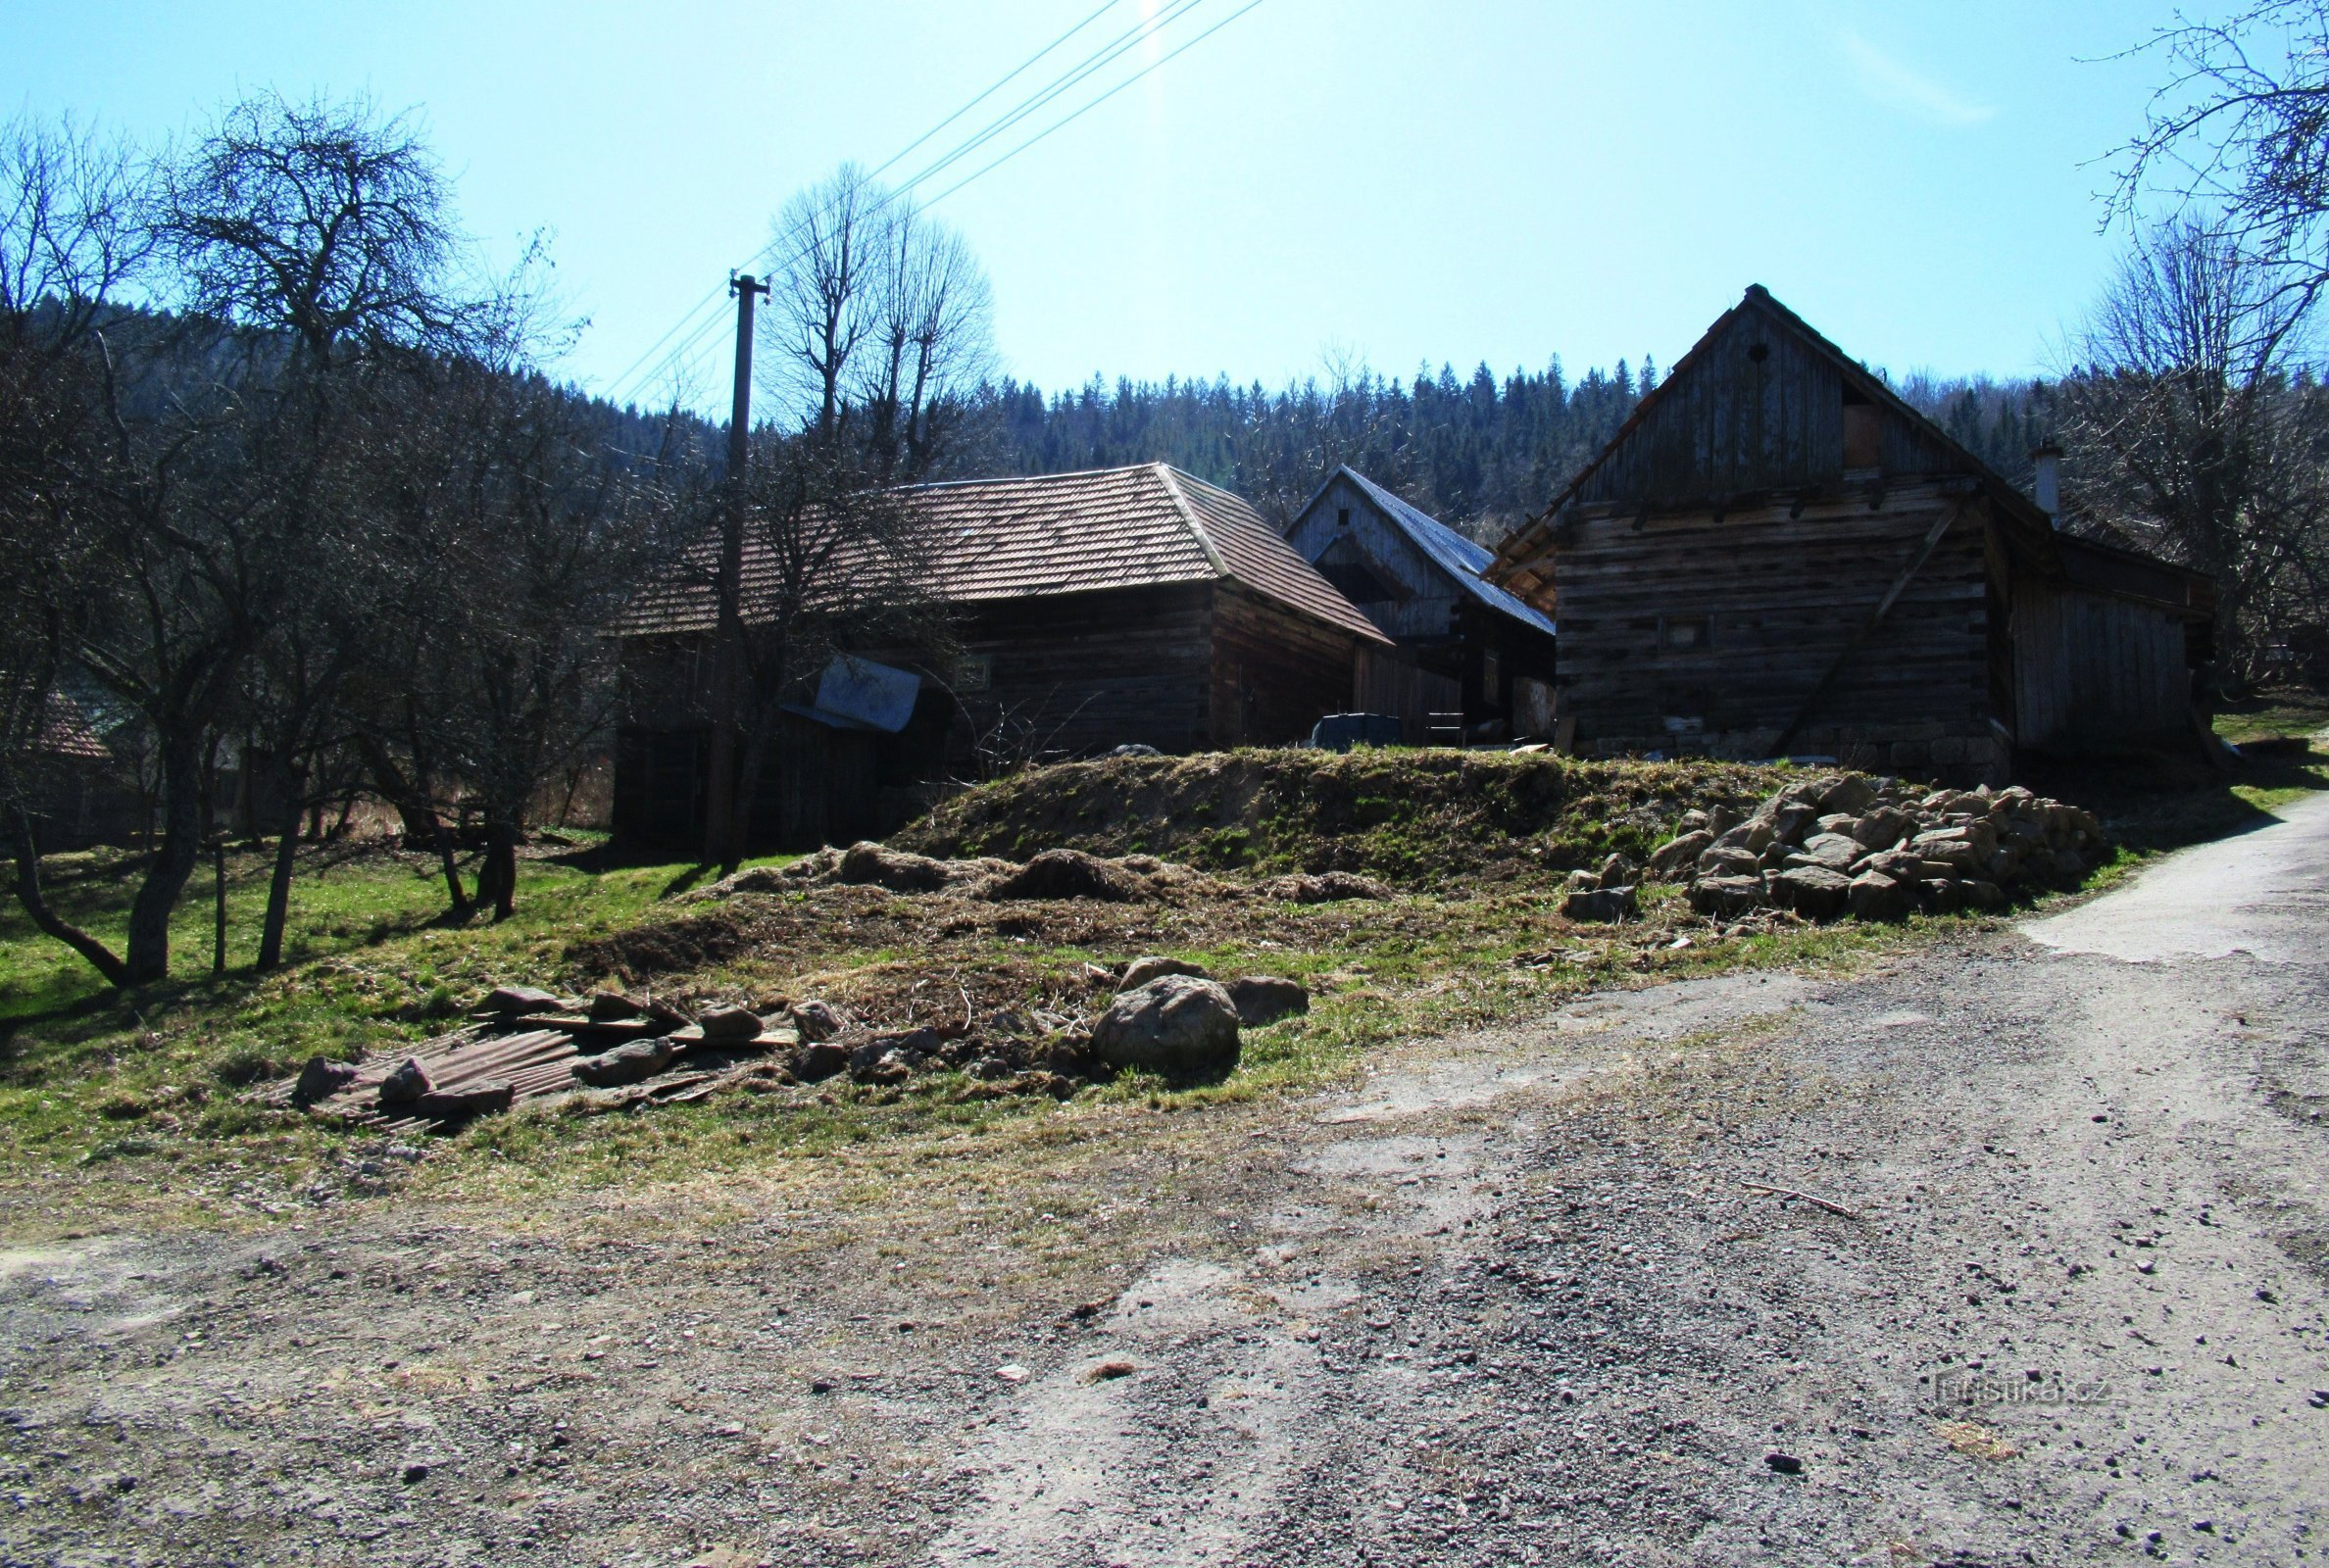 Hajdovy paseky - cel mai mare din satul Zděchov din Țara Românească